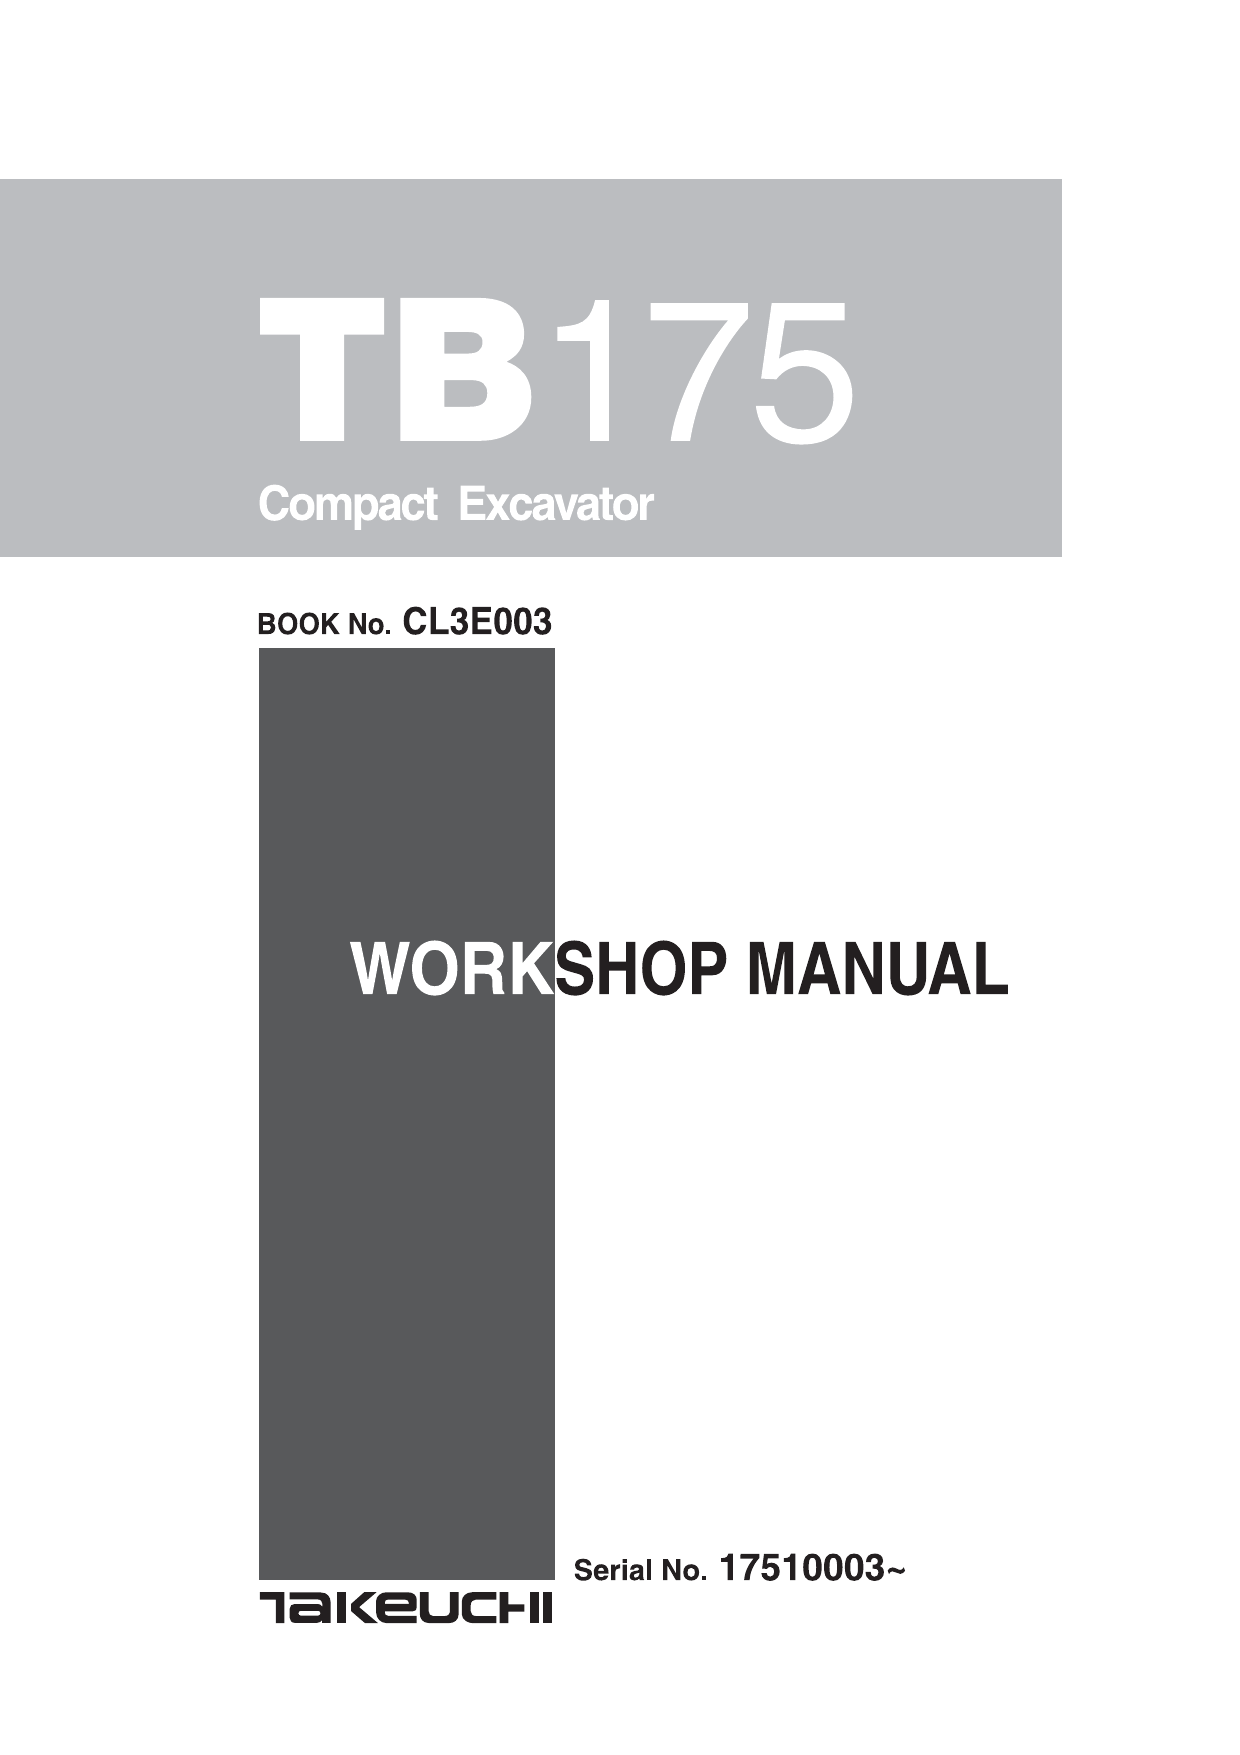 Takeuchi TB 175 compact excavator workshop manual Preview image 1